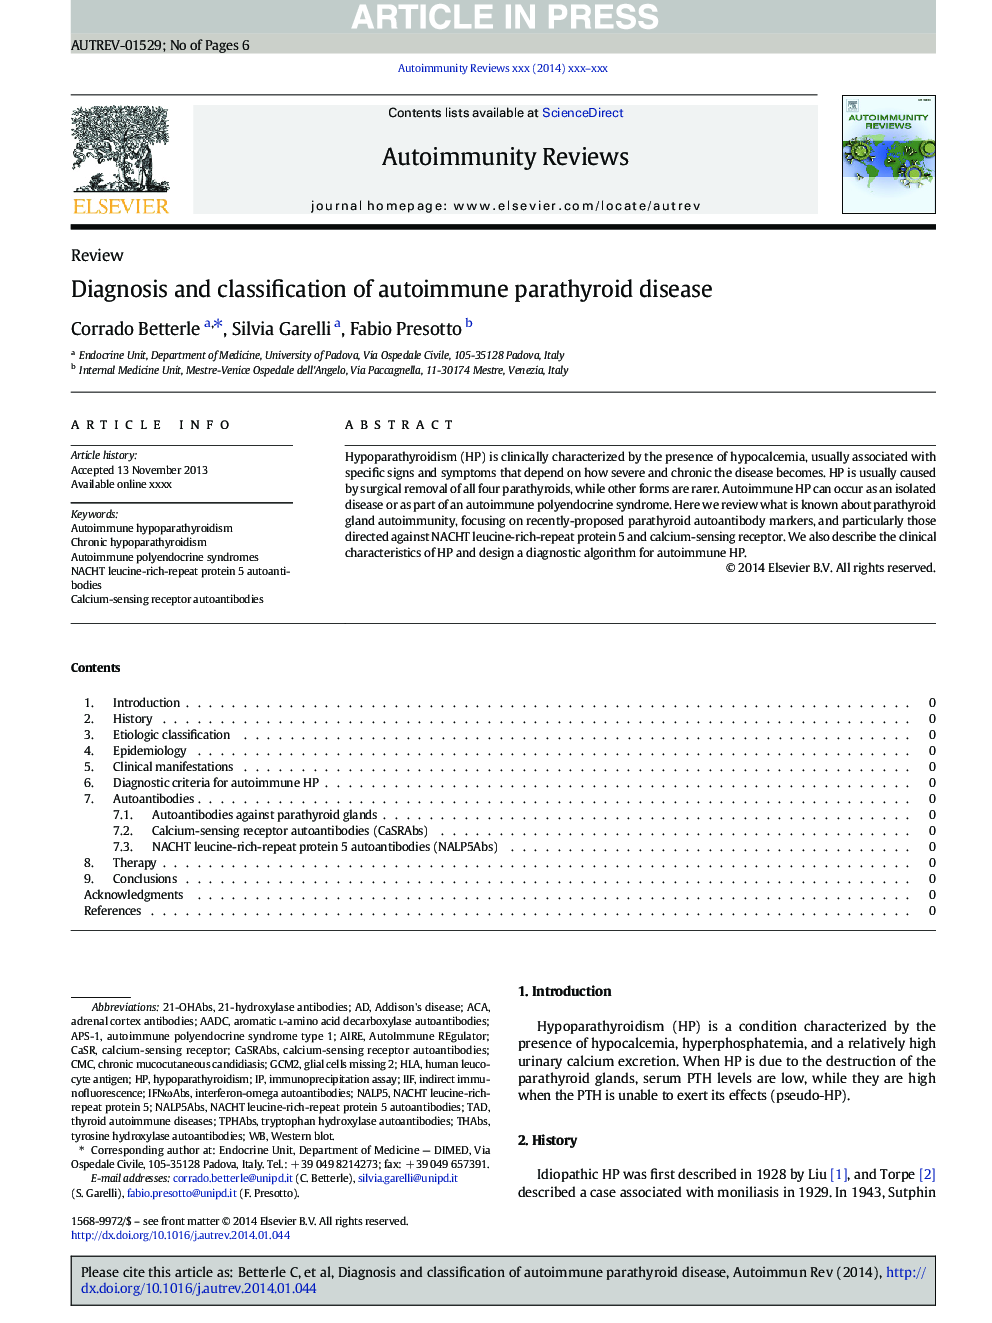 Diagnosis and classification of autoimmune parathyroid disease